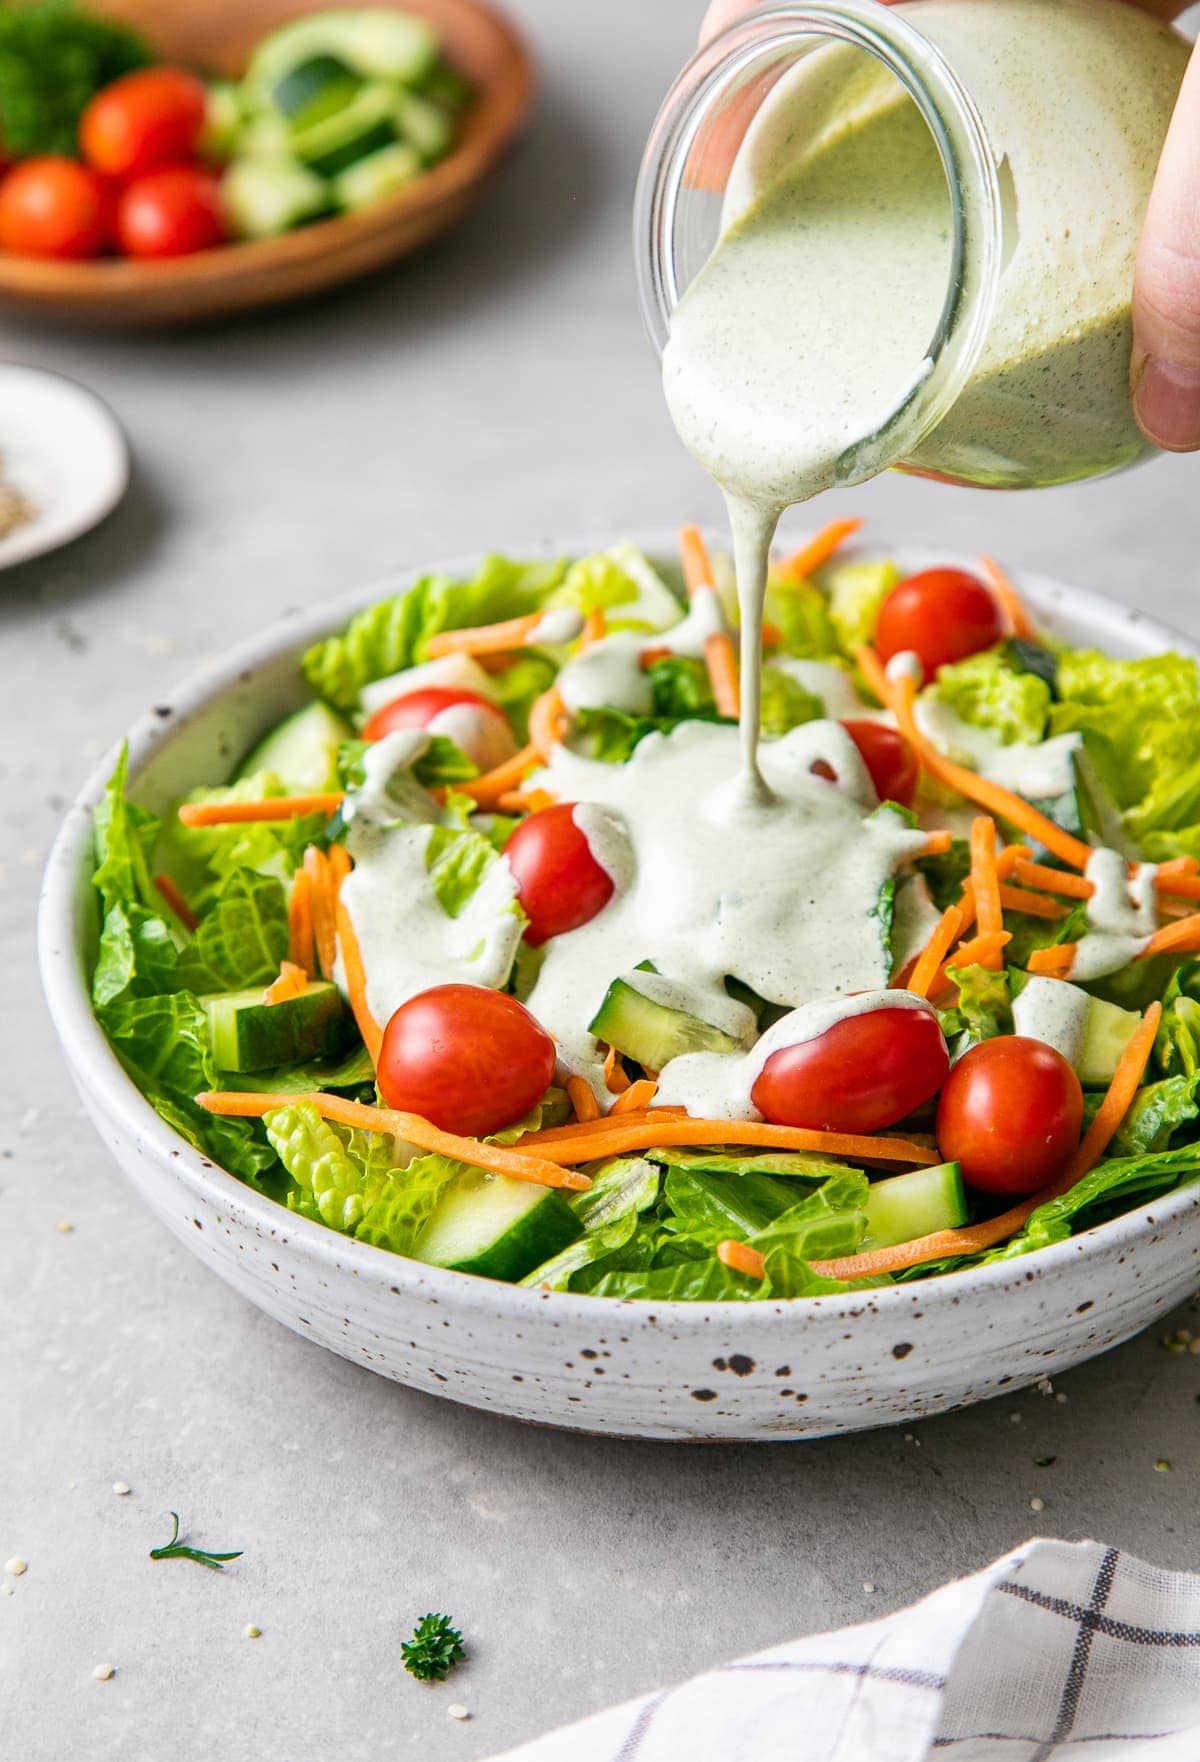 https://simple-veganista.com/wp-content/uploads/2012/12/creamy-hemp-seed-salad-dressing-recipe-1.jpg